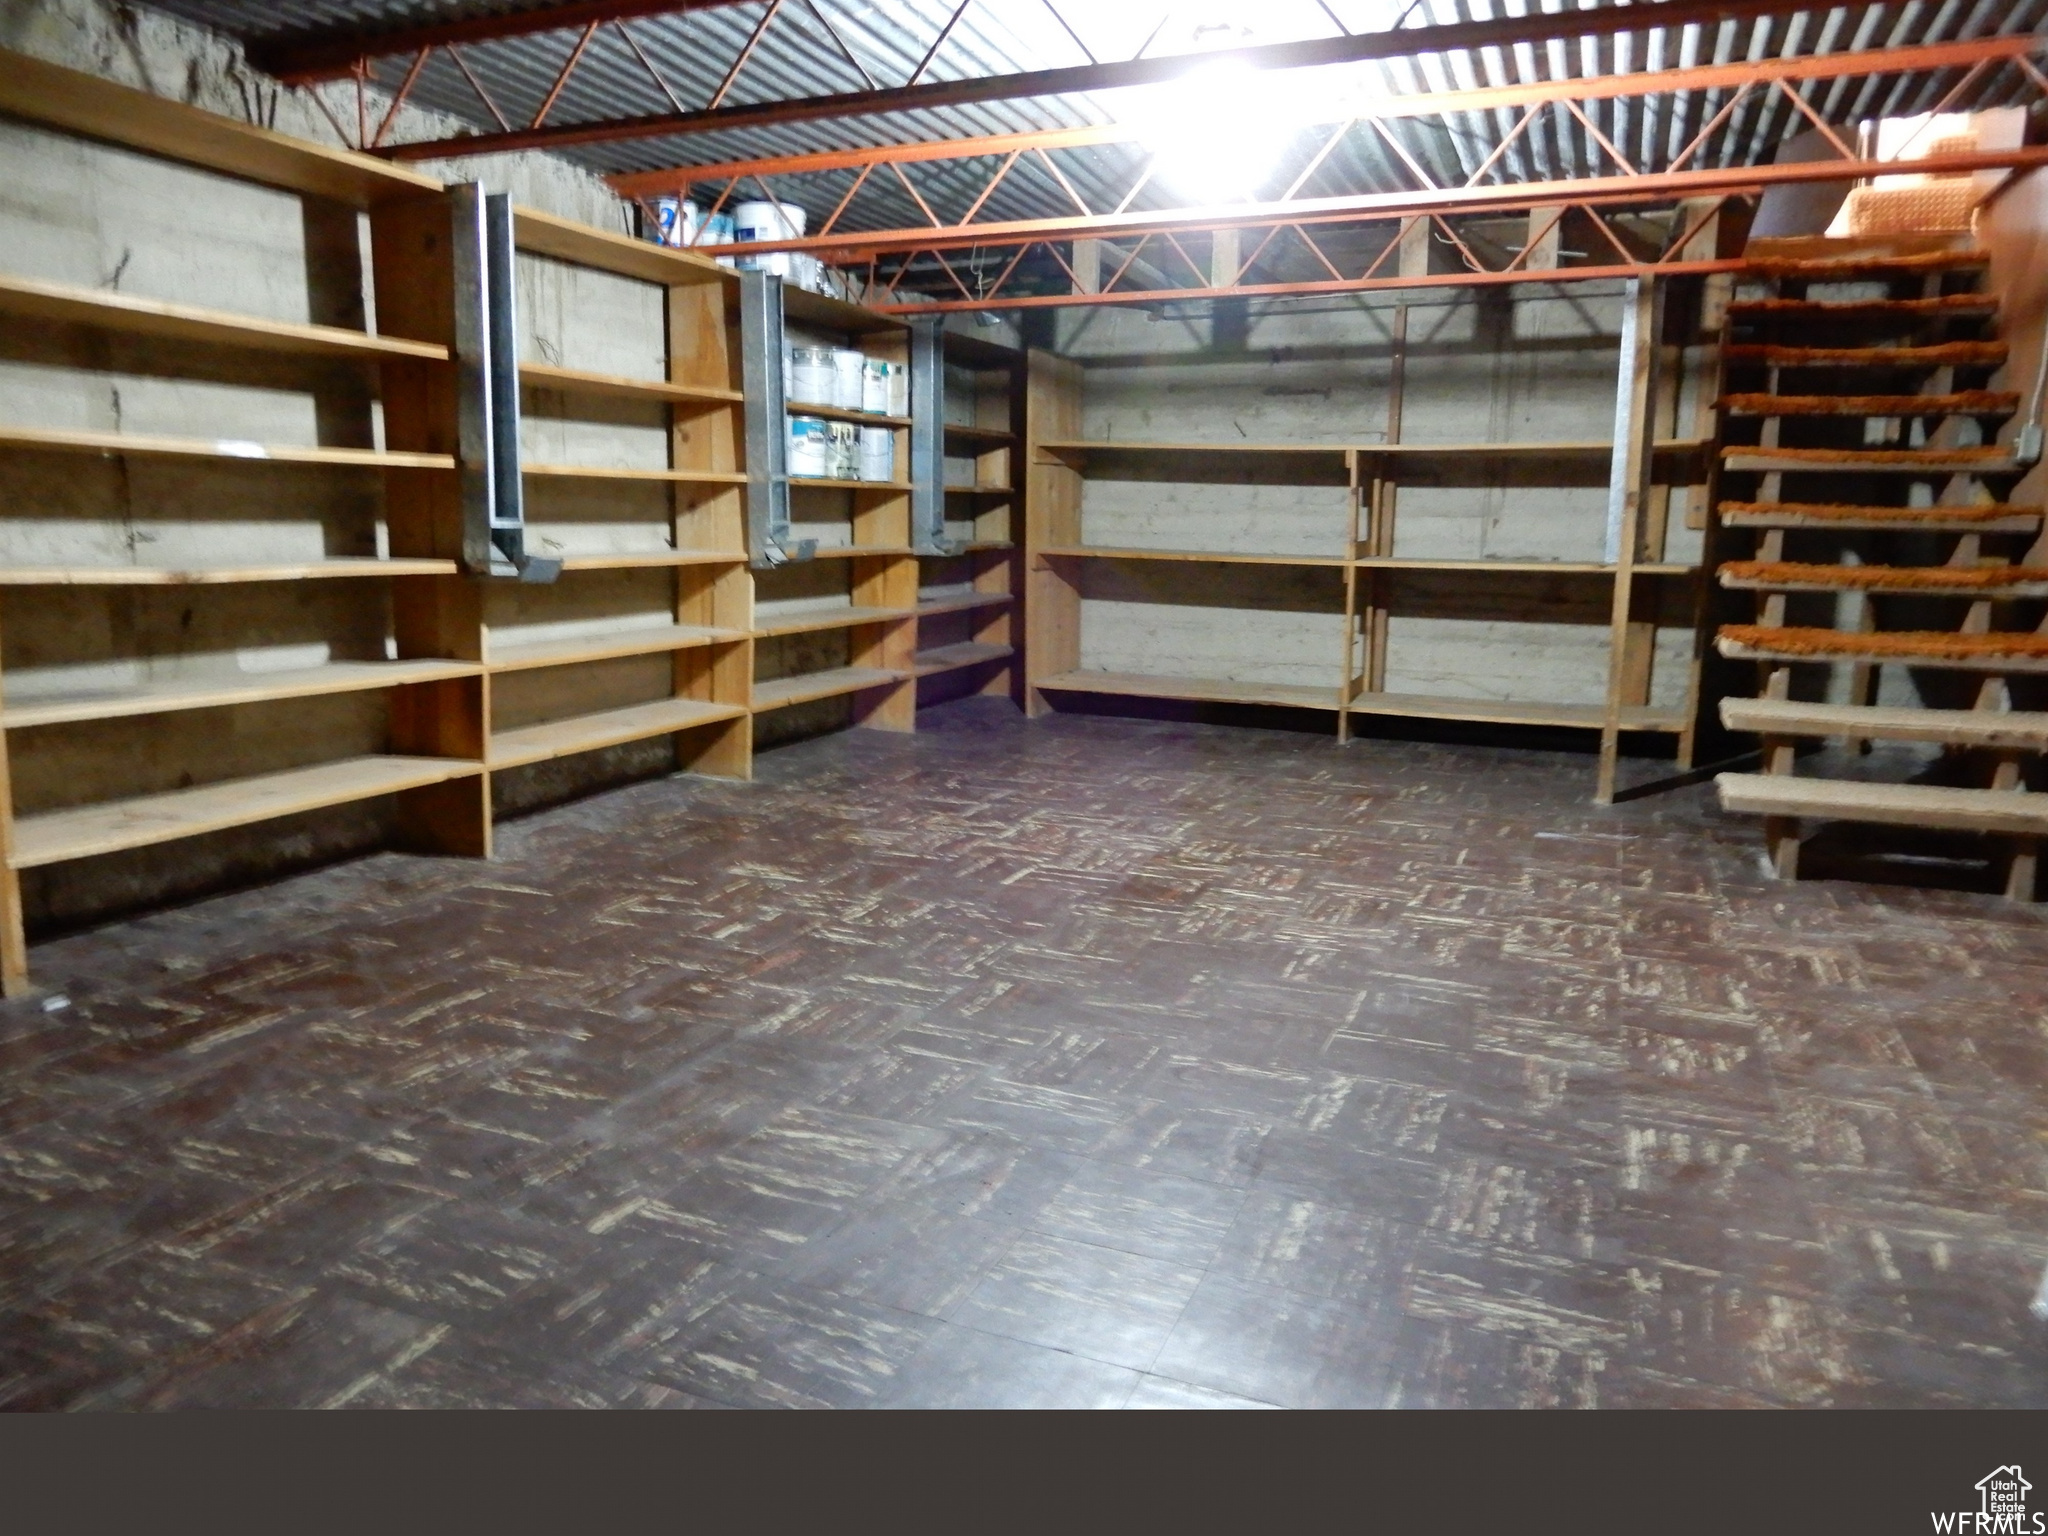 View of basement storage room